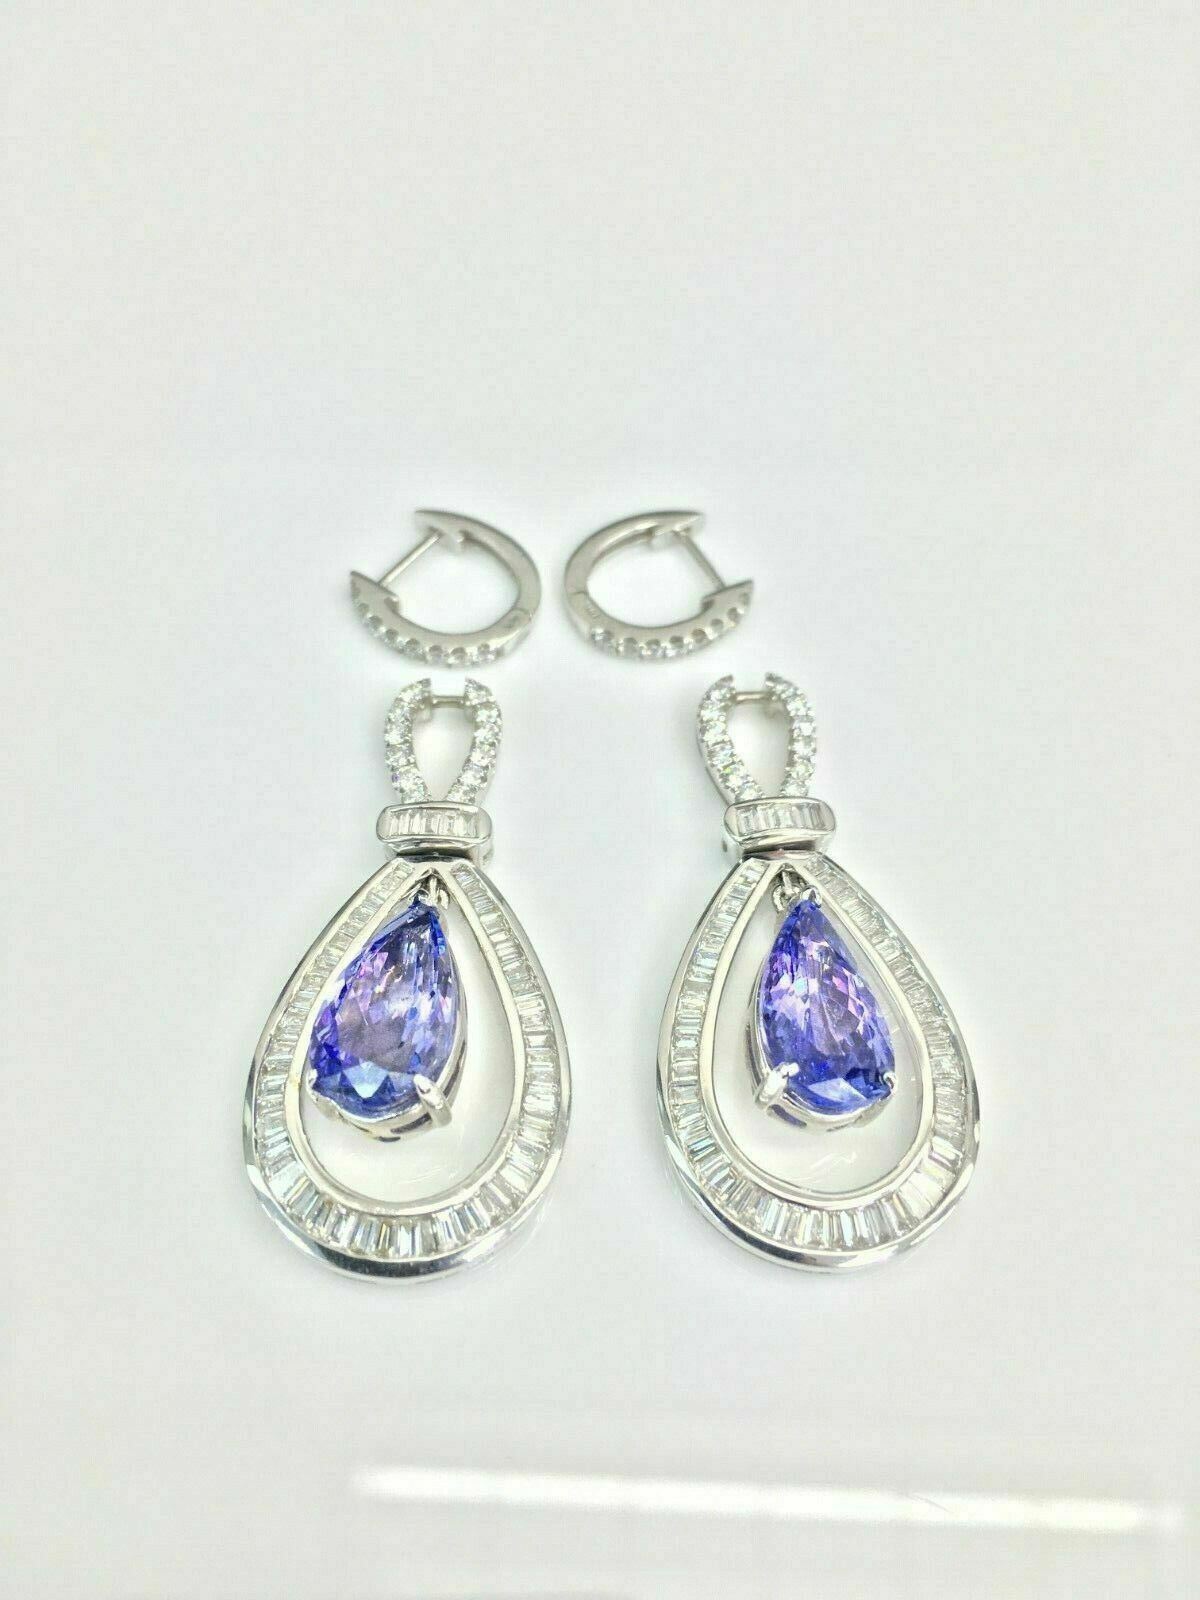 10.84 Carats t.w. Diamond and Tanzanite Custom Made Dangle Earrings 18K Gold